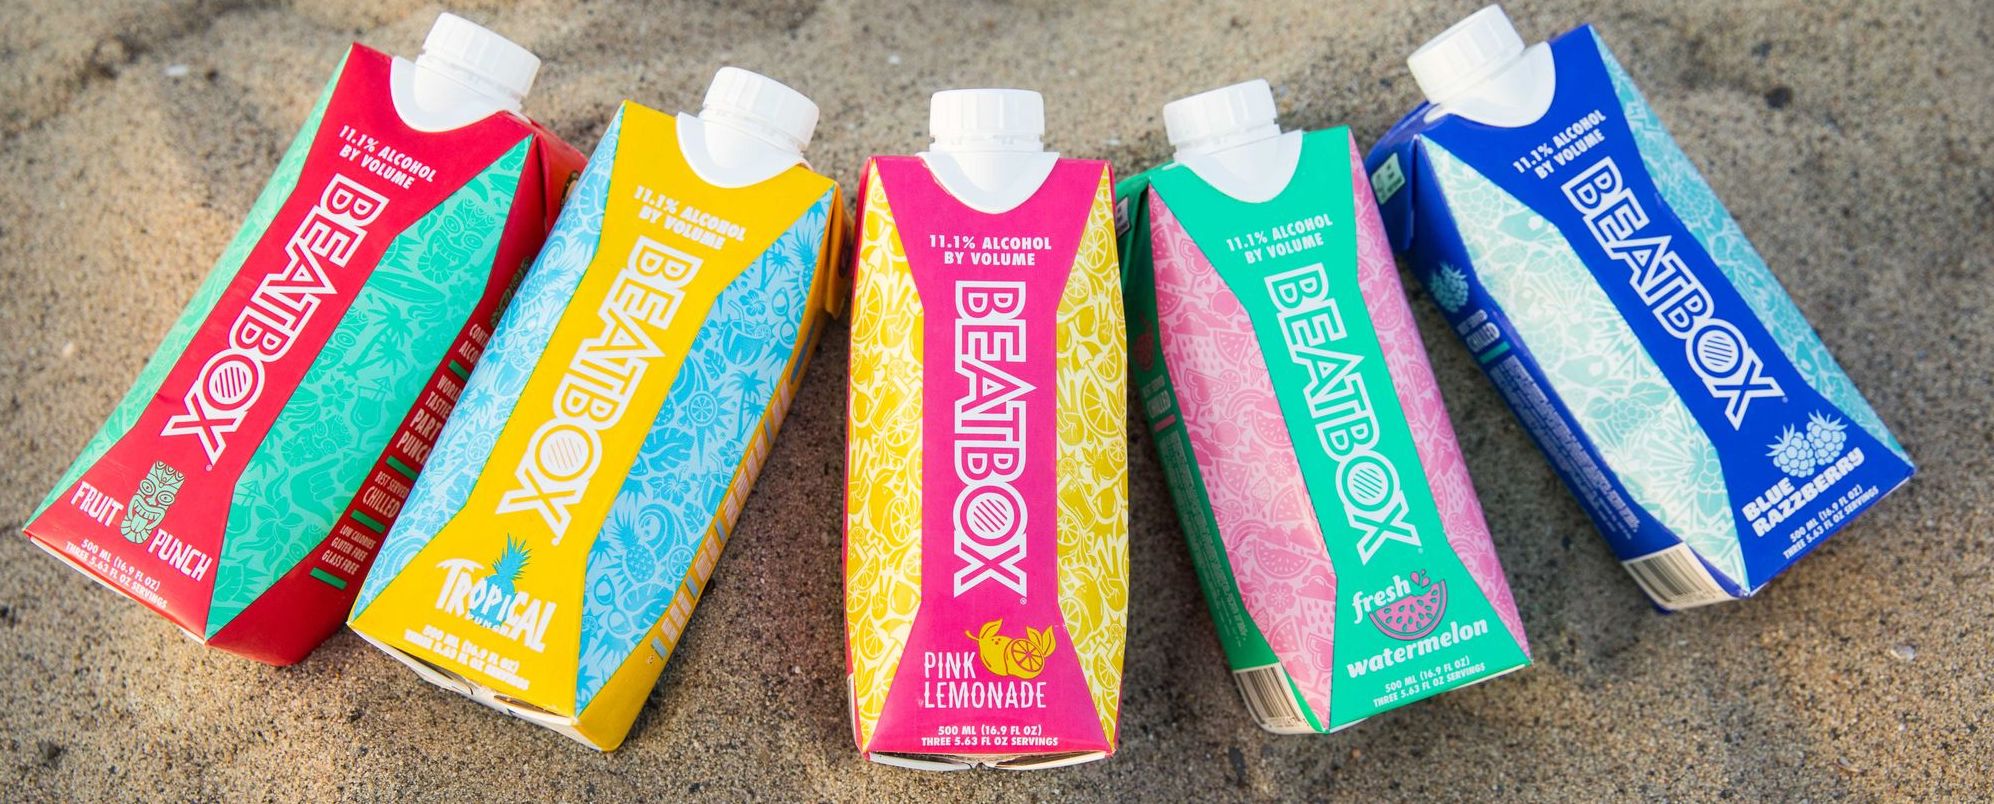 BeatBox Beverages Goes Plastic Neutral